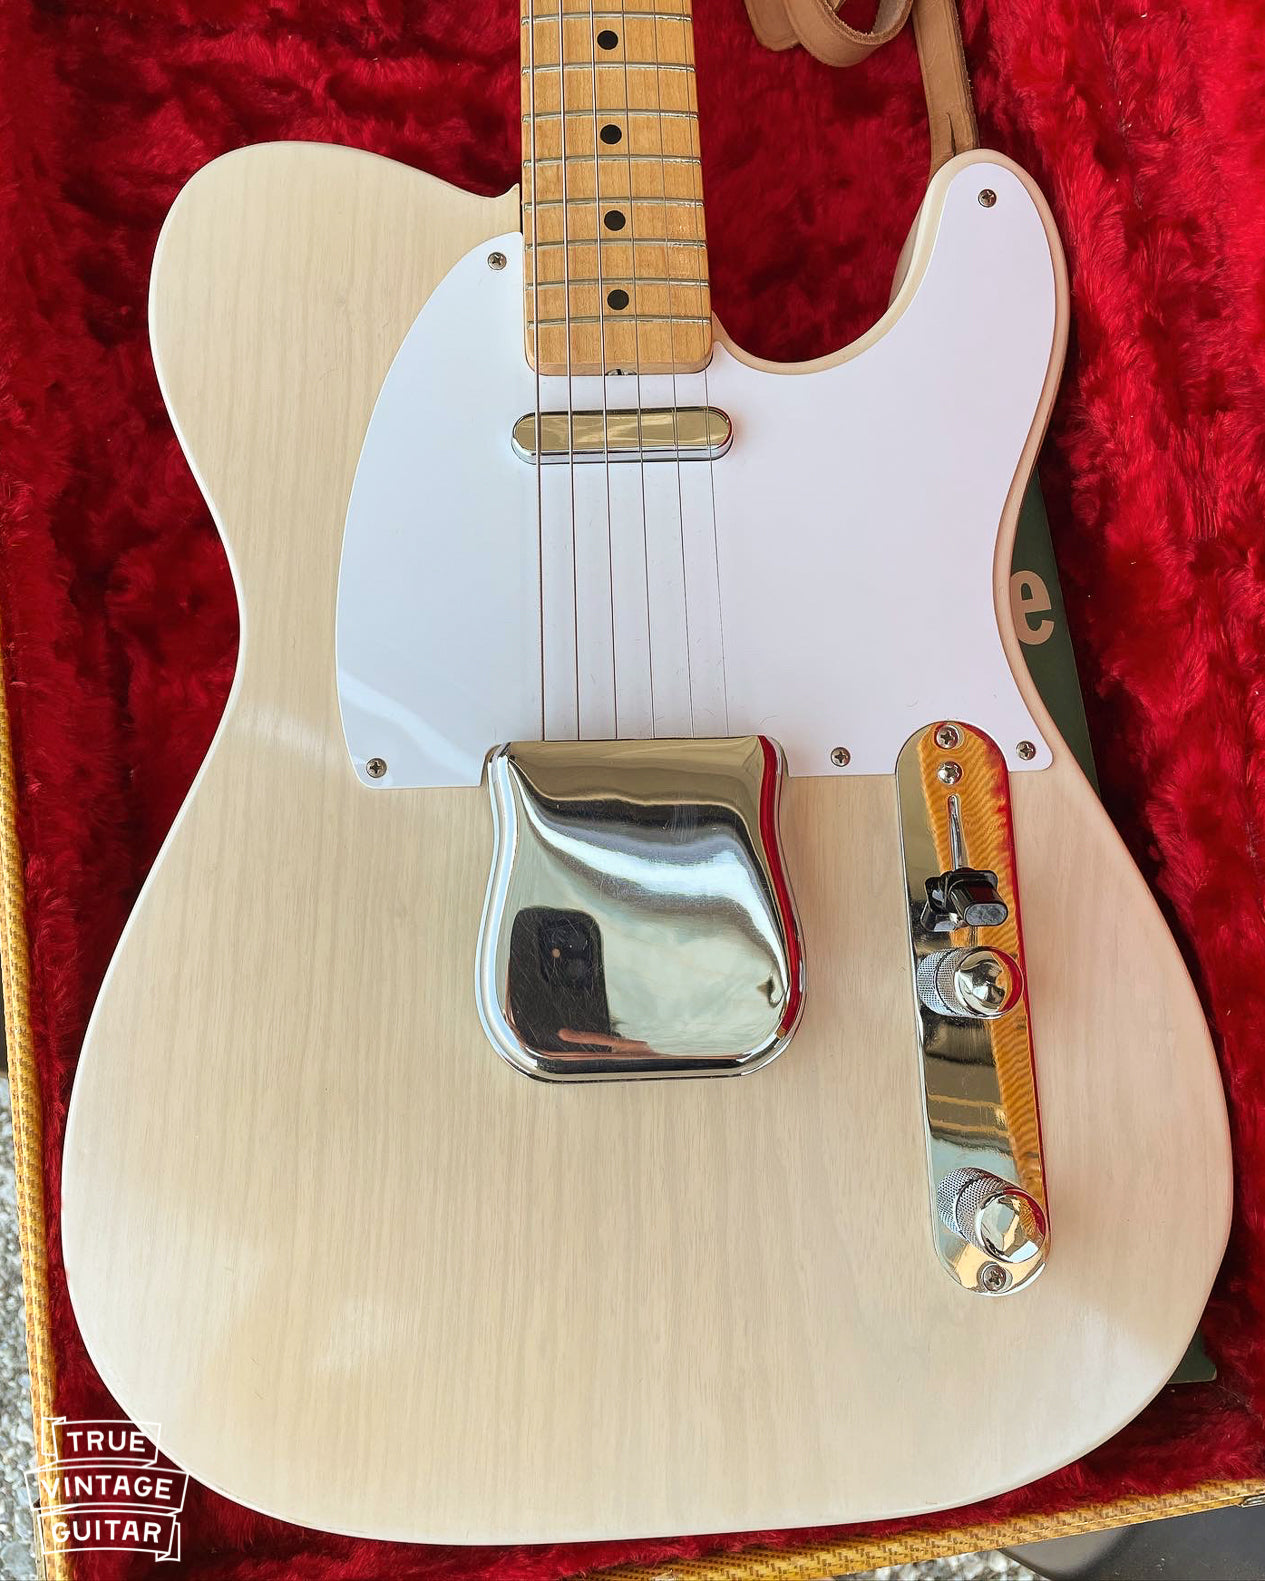 1957 Fender Telecaster guitar